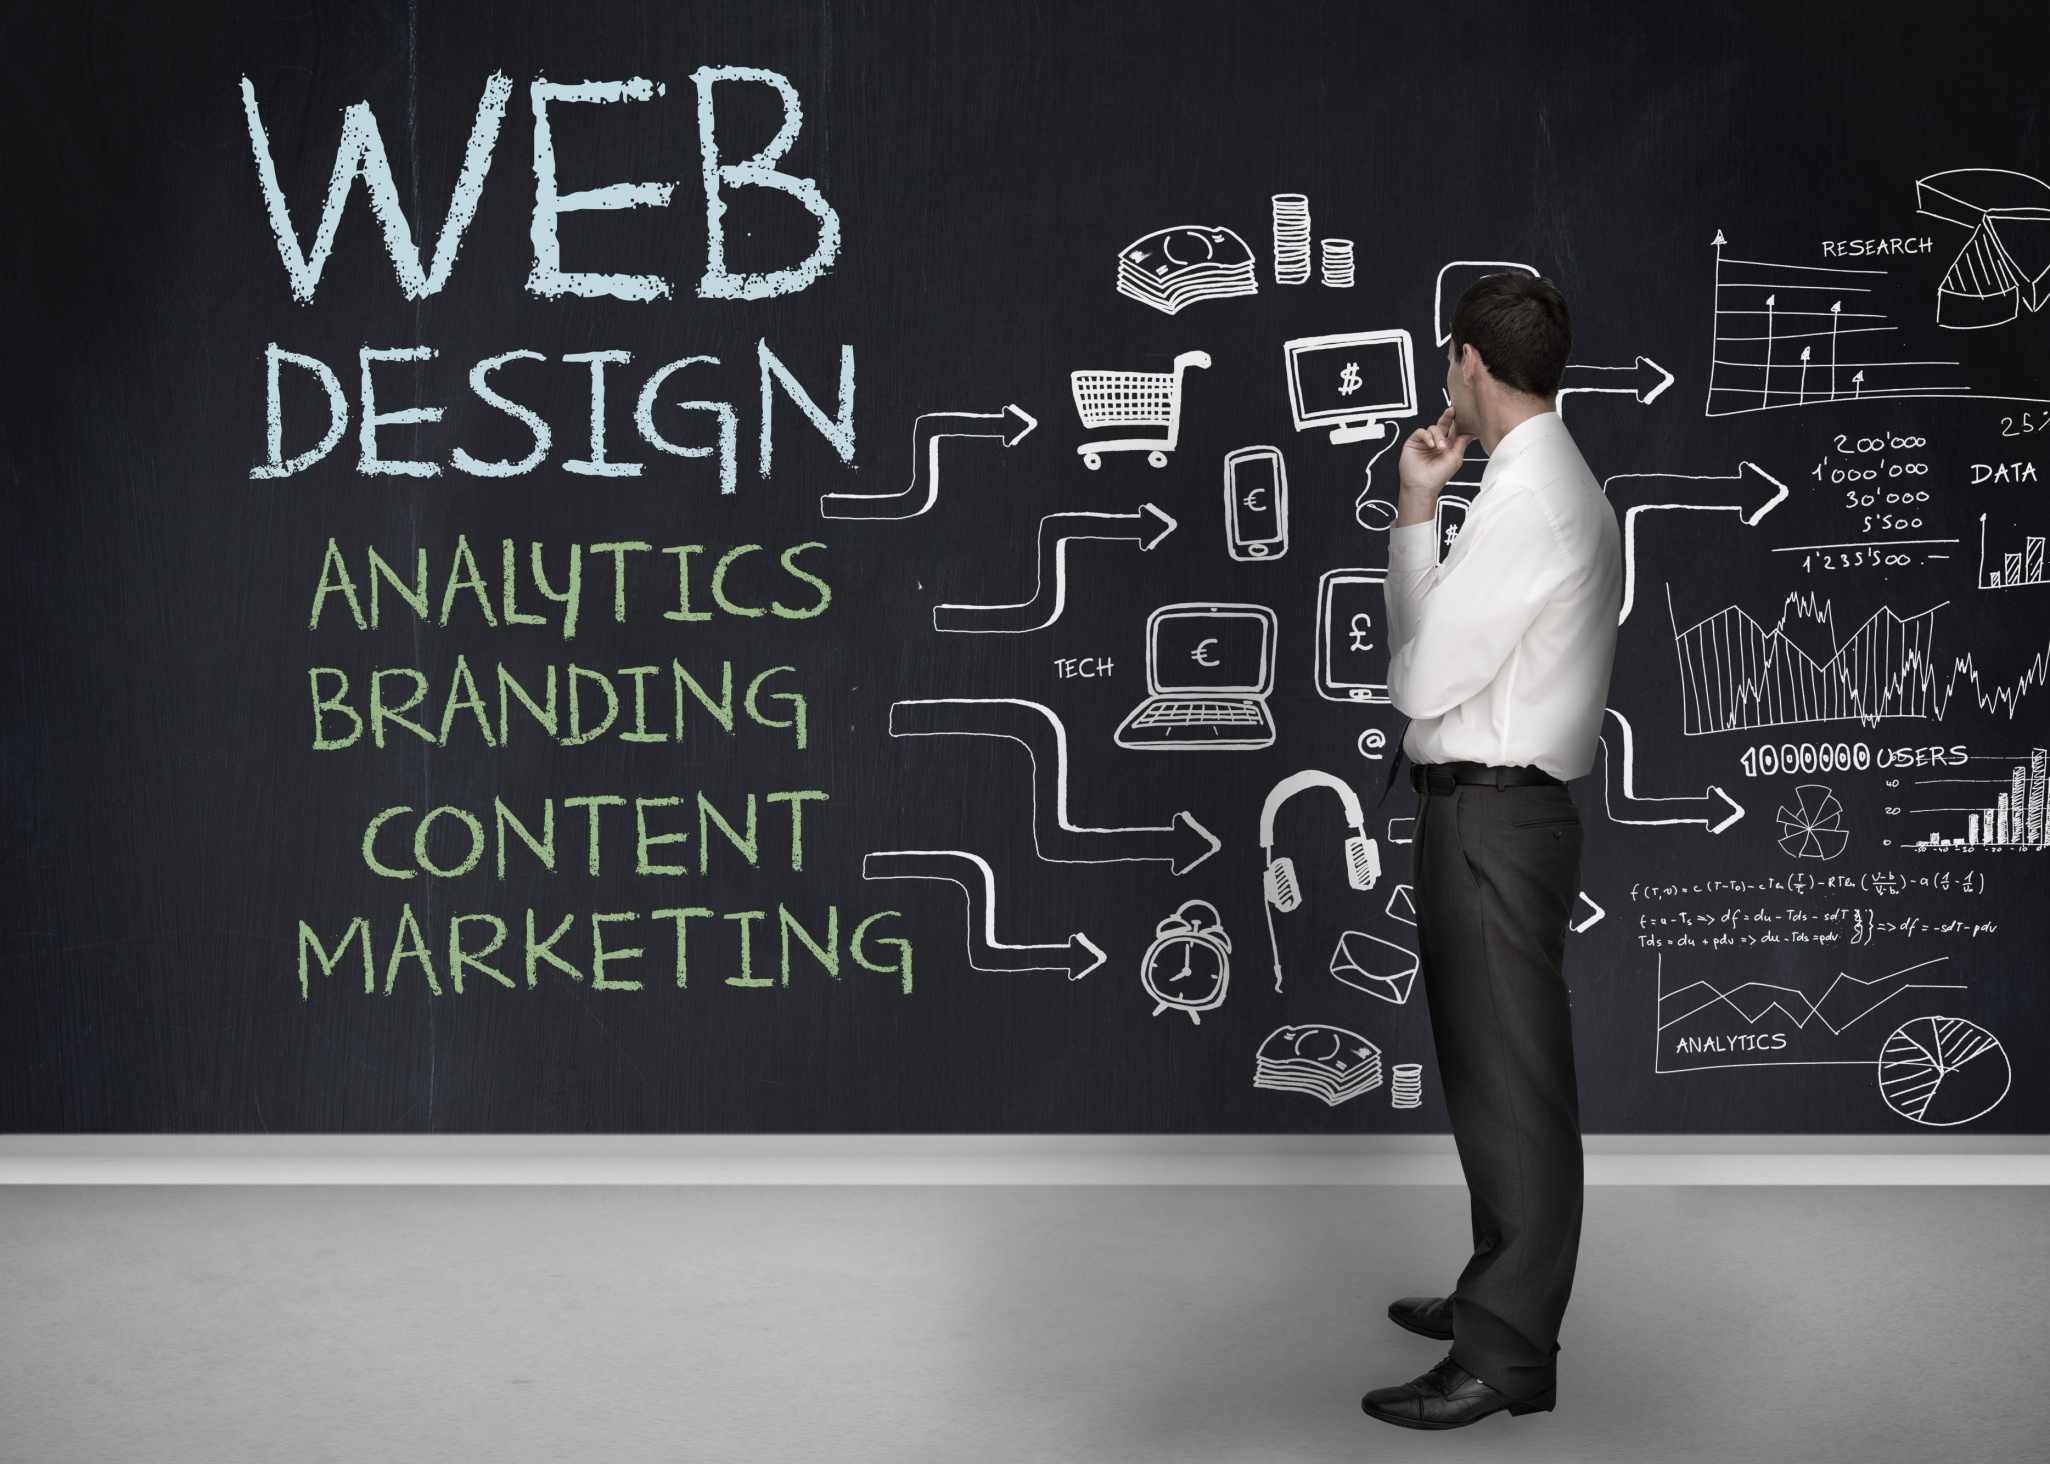 law firm web design